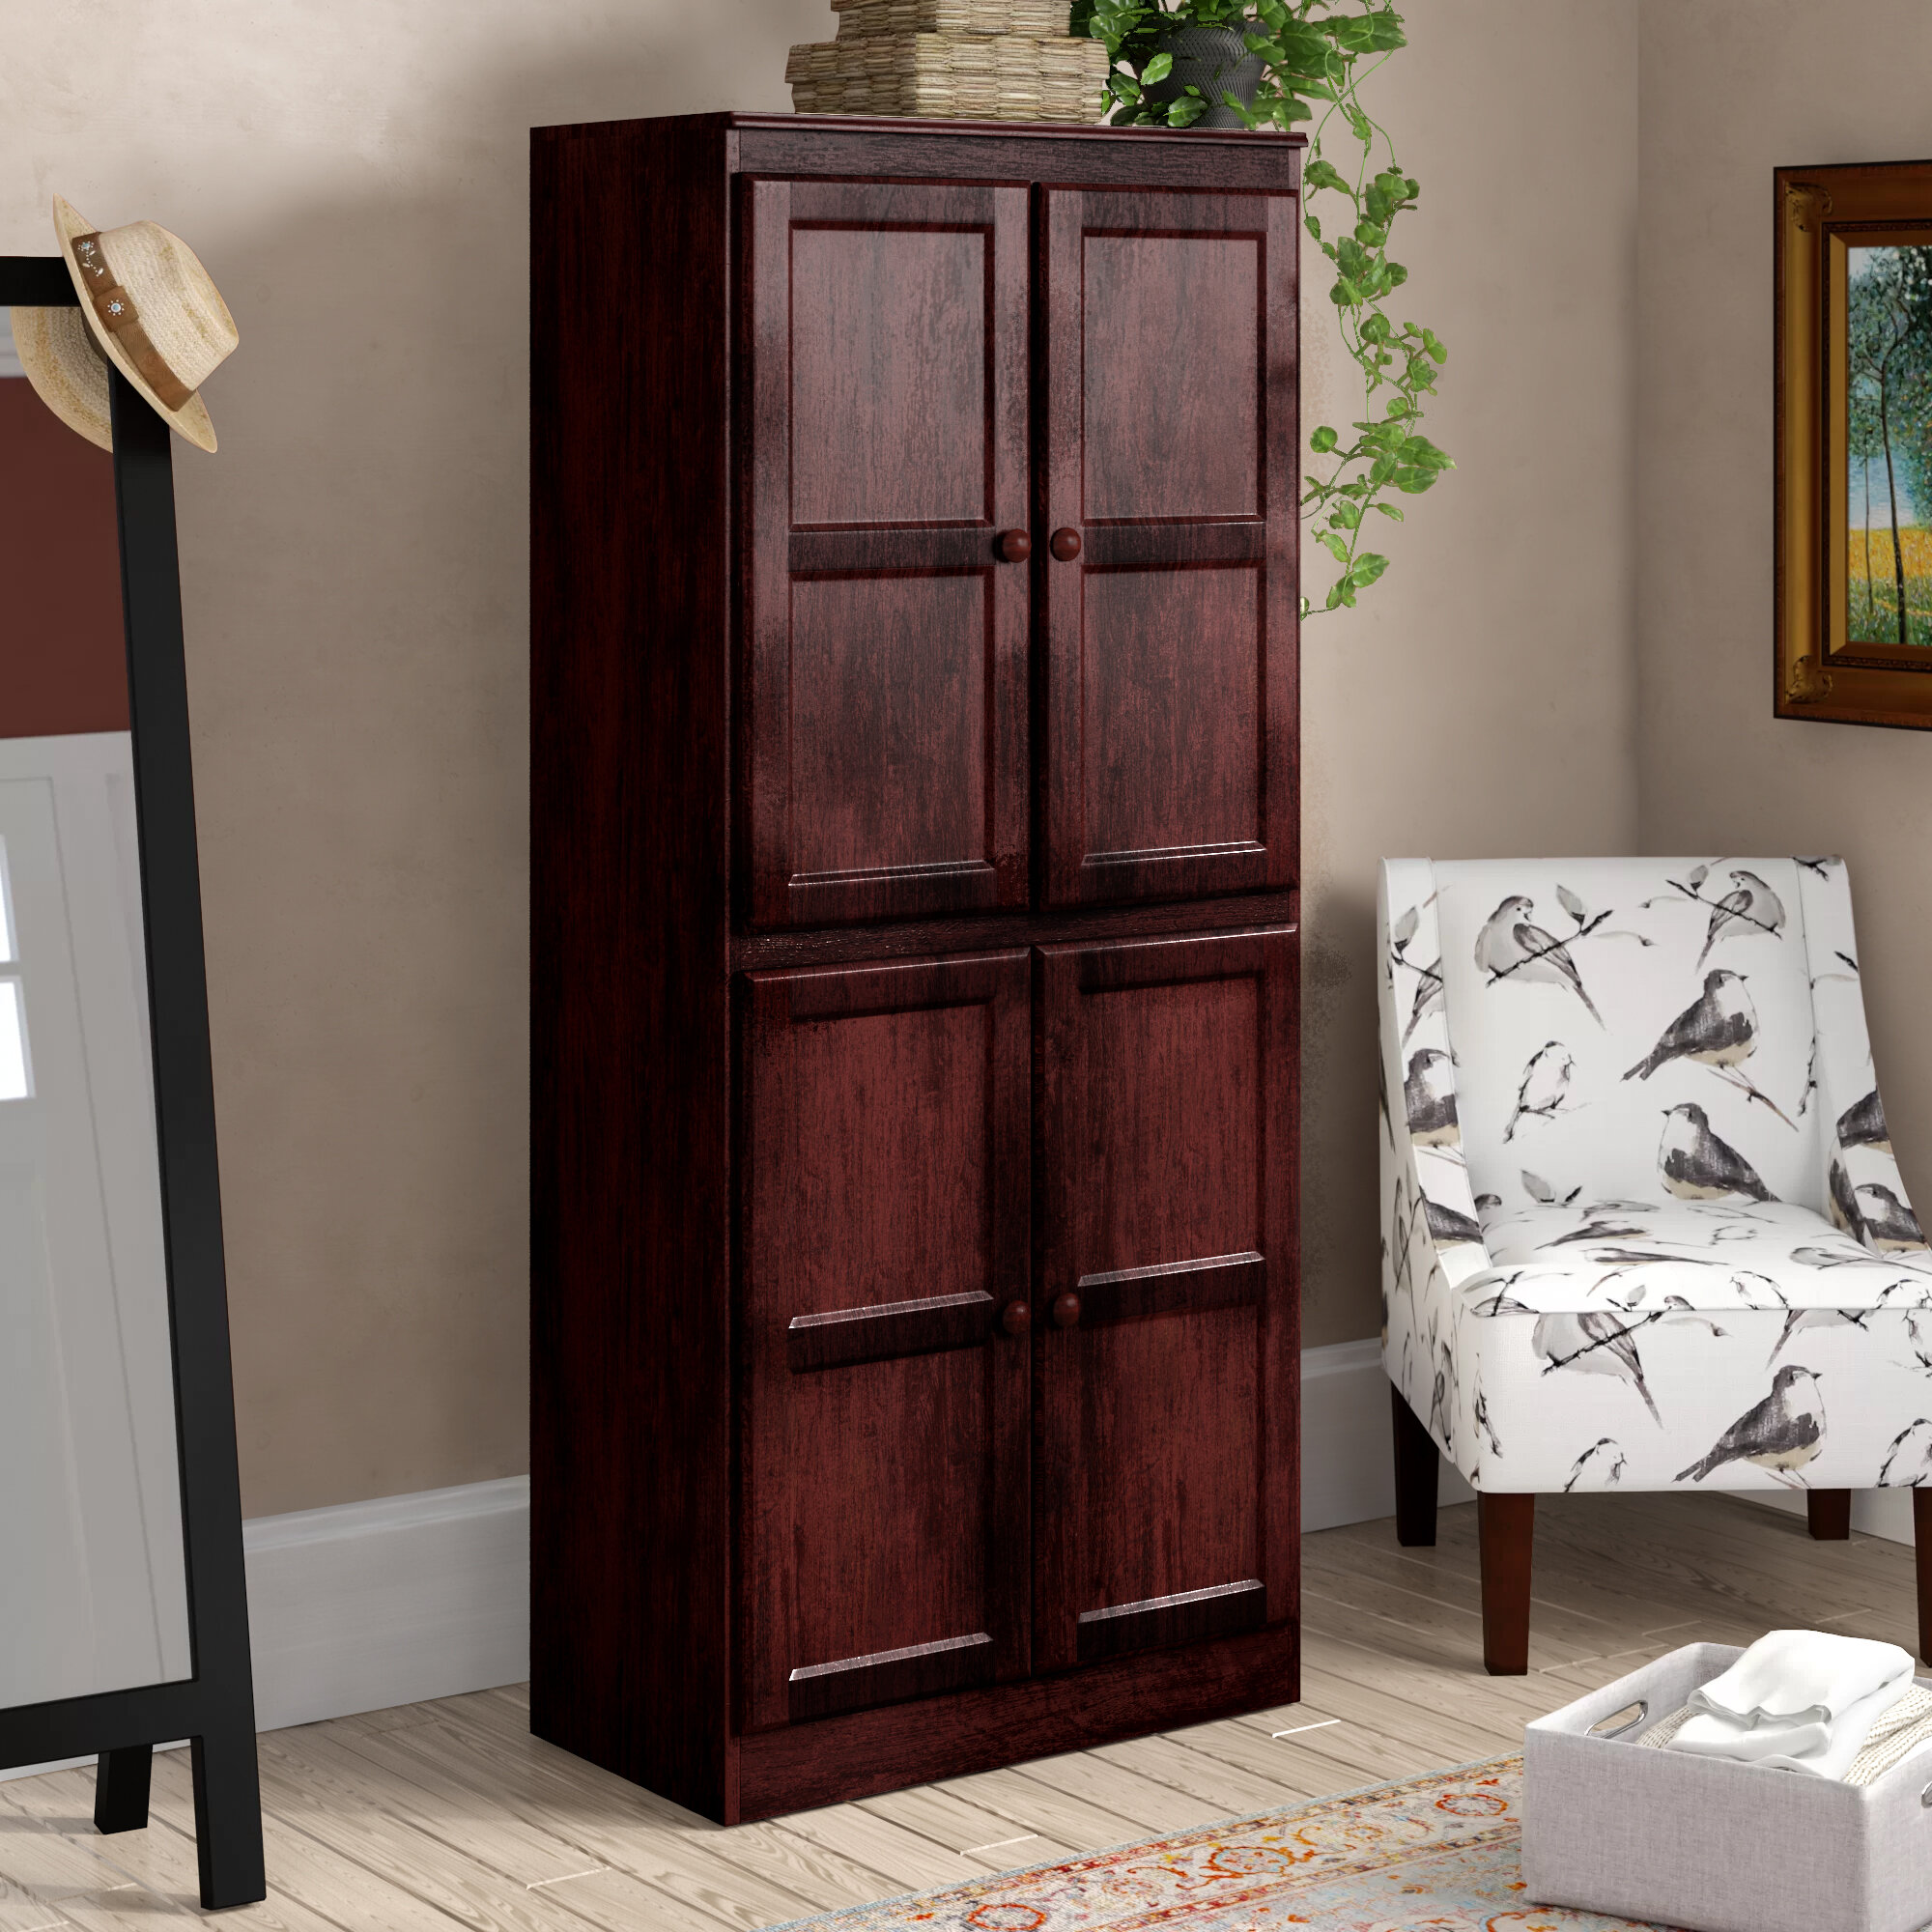 Darby Home Co Kesterson 4 Door Storage Cabinet Reviews Wayfair